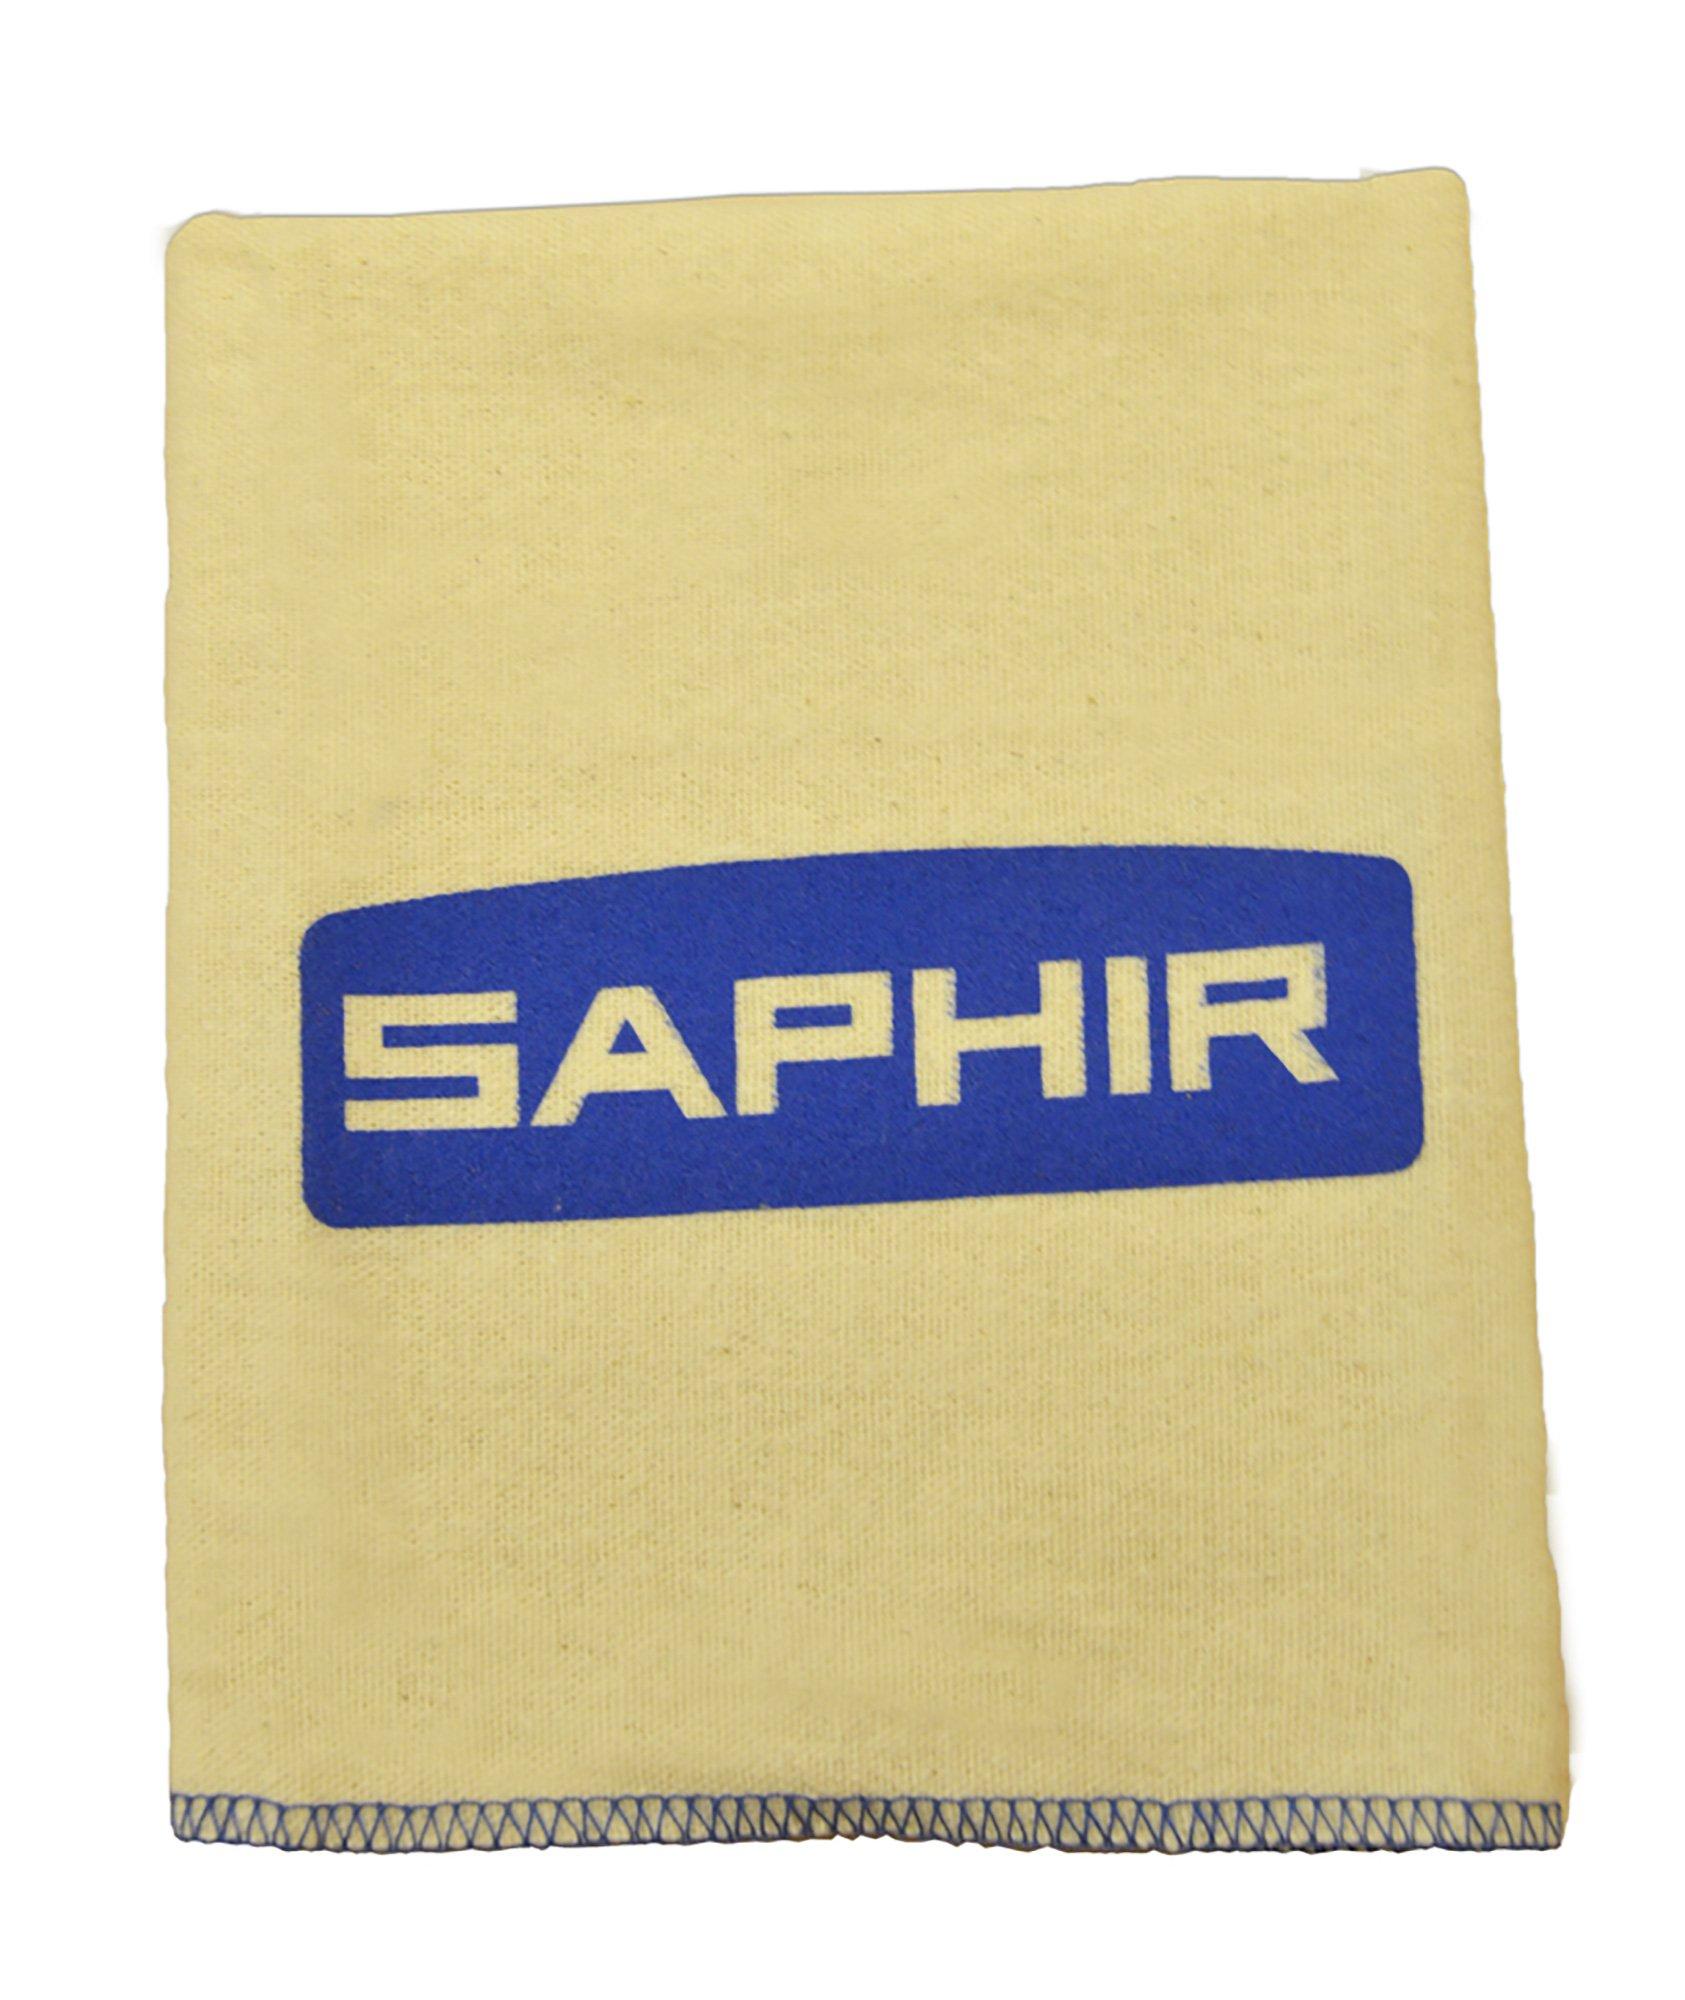 Saphir Chamoisine en coton